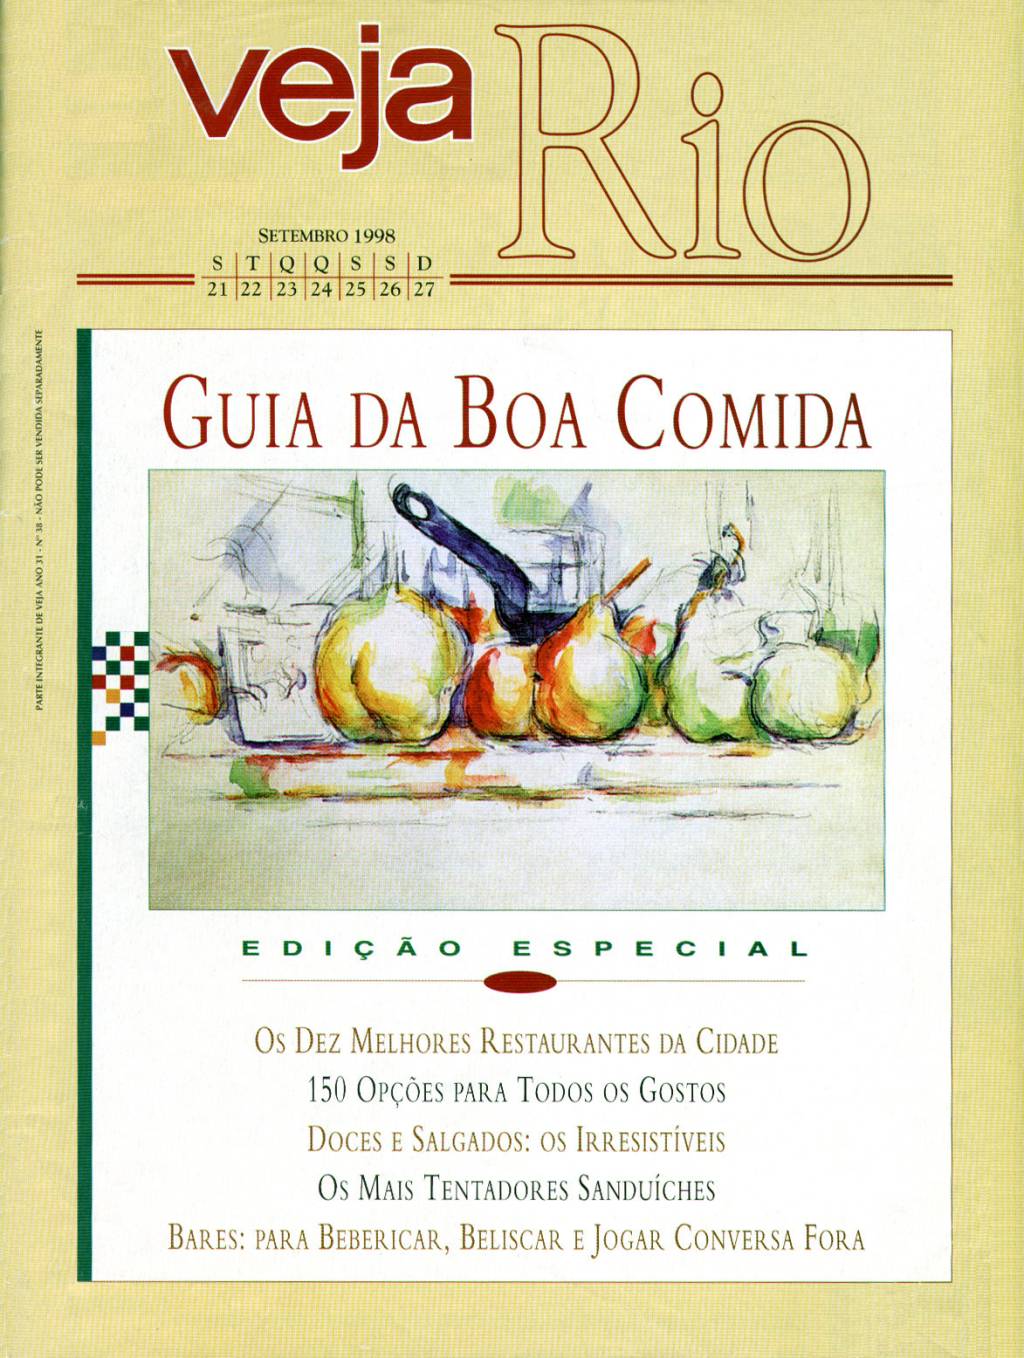 Capa da revista Veja Rio Especial Guia da Boa Comida, de 23 de setembro de 1998